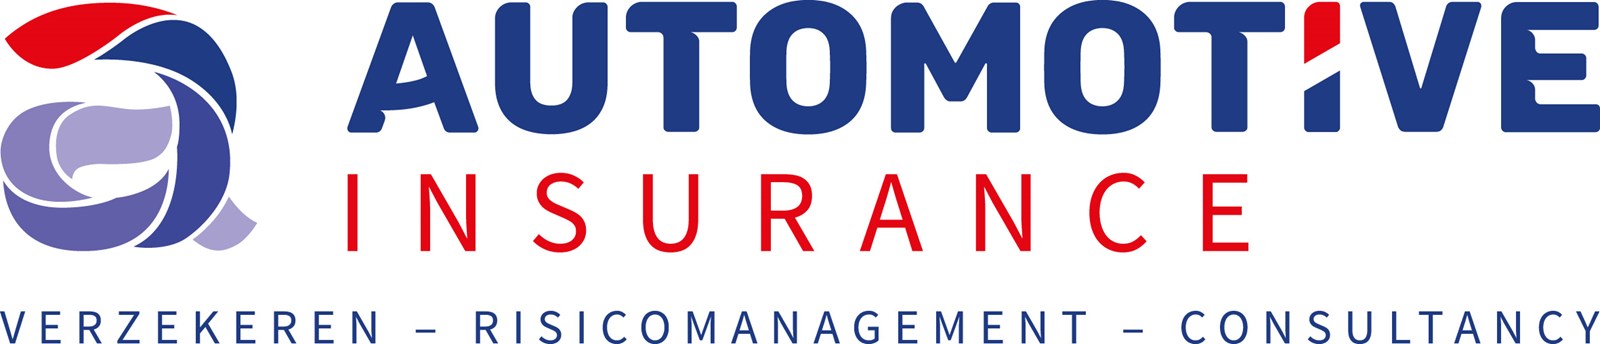 Automotive insurance logo